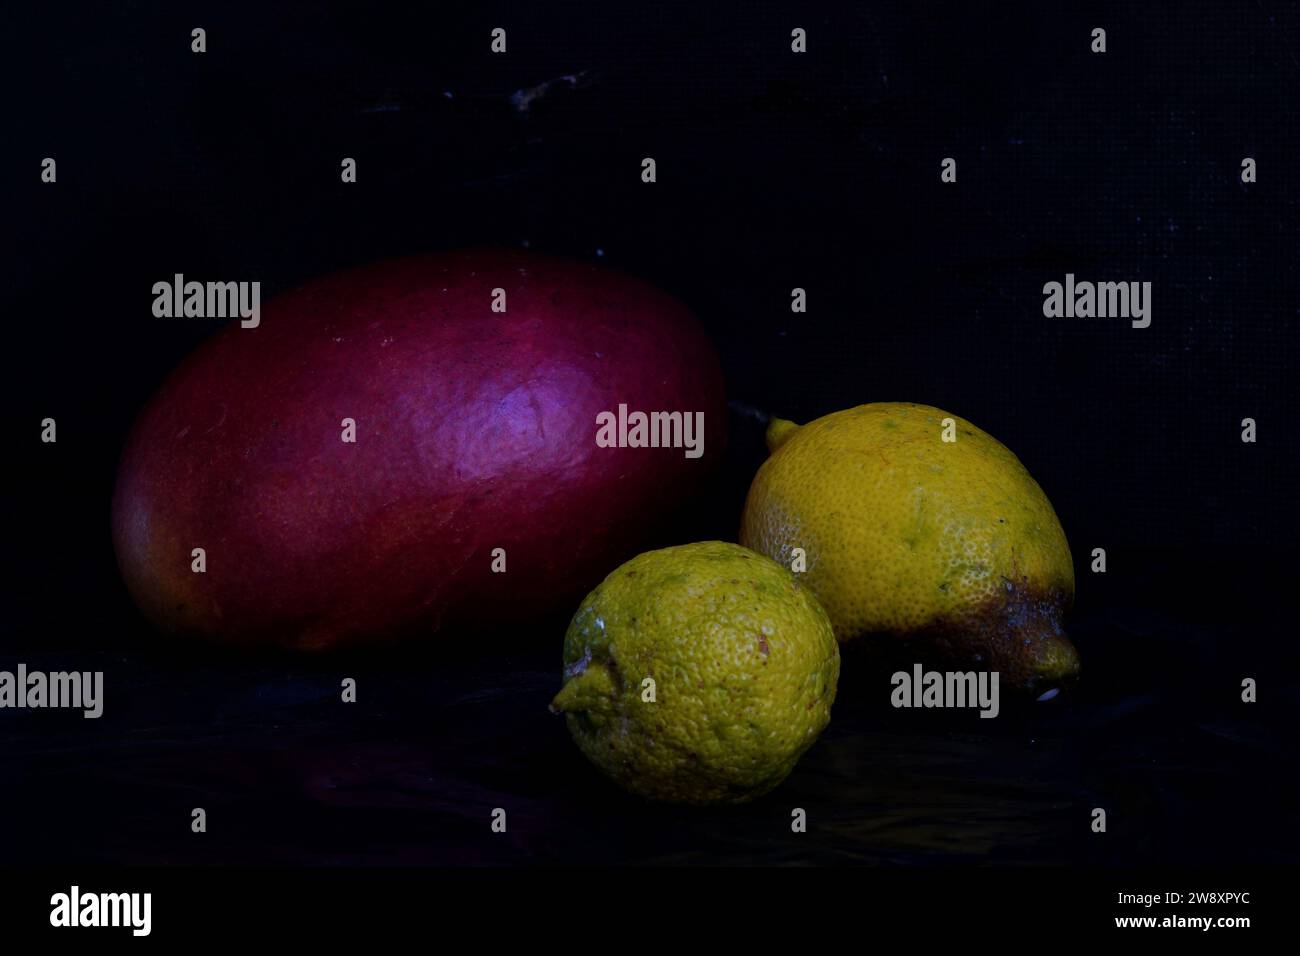 Still life with red mango, yellow lemons and dark background Stock Photo